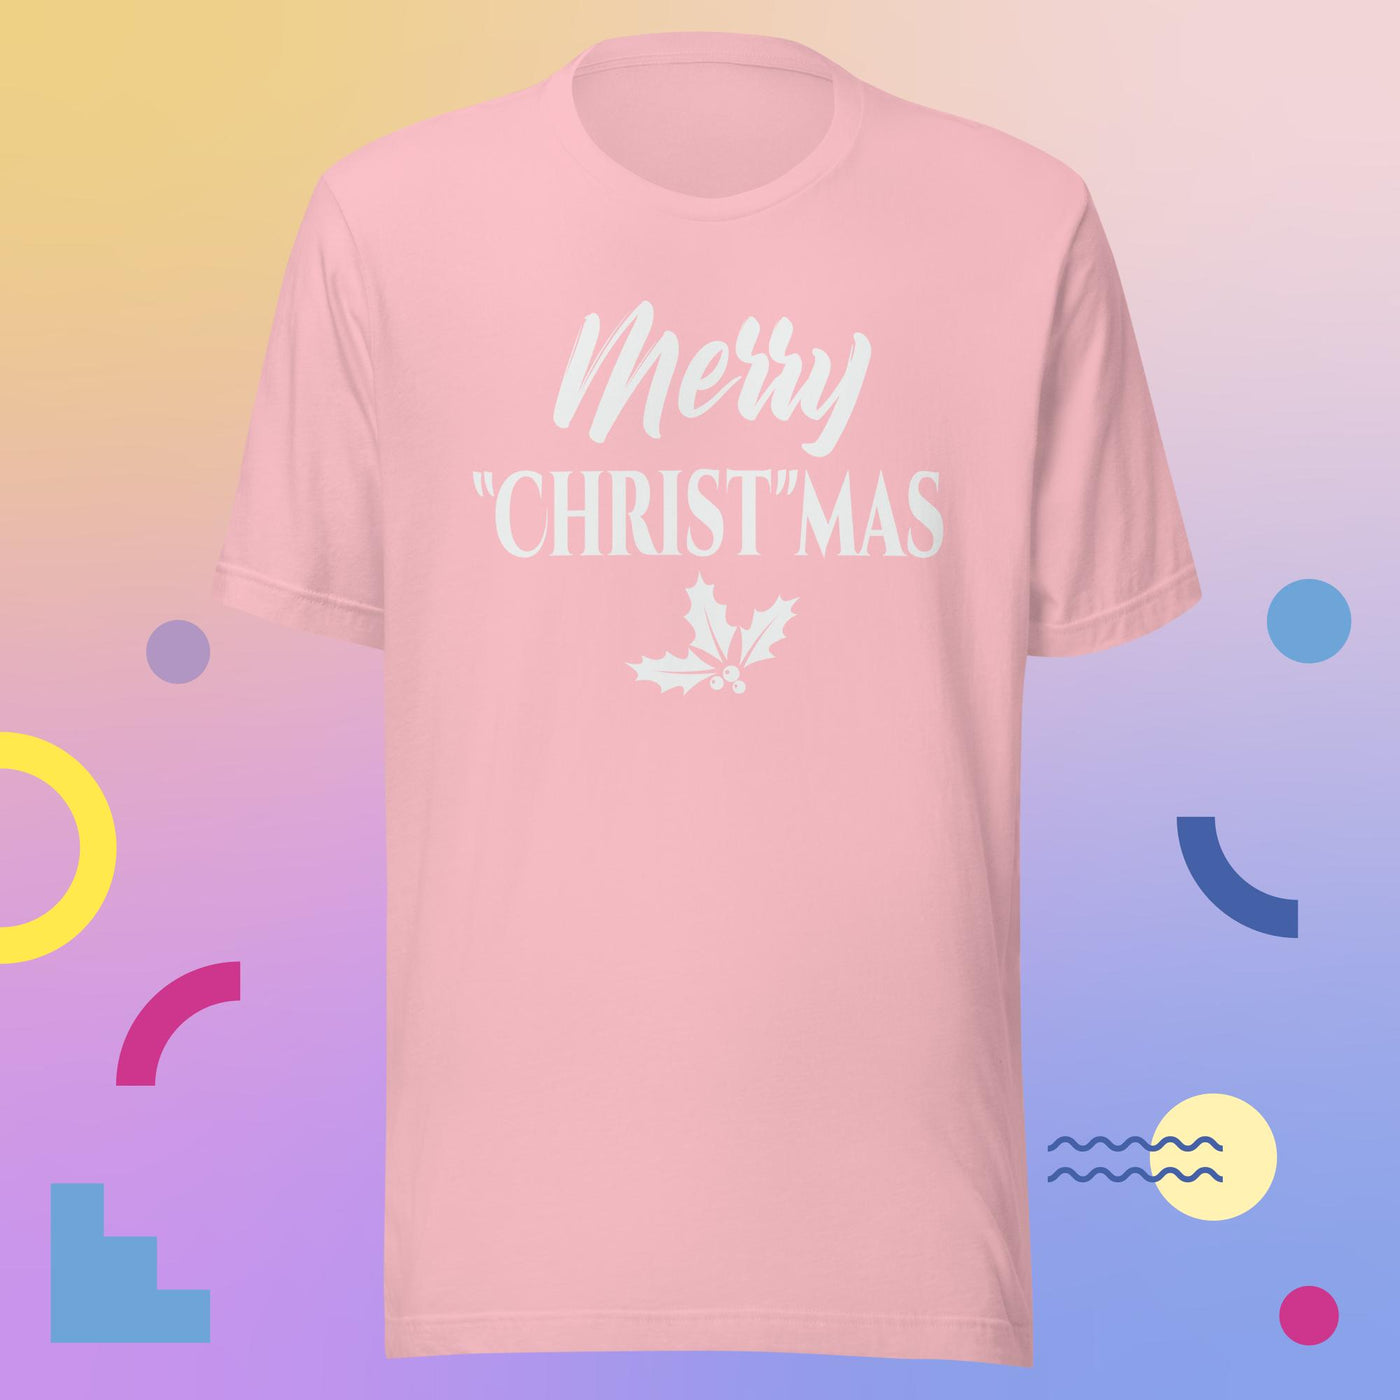 F&H Merry "Christ"mas t-shirt